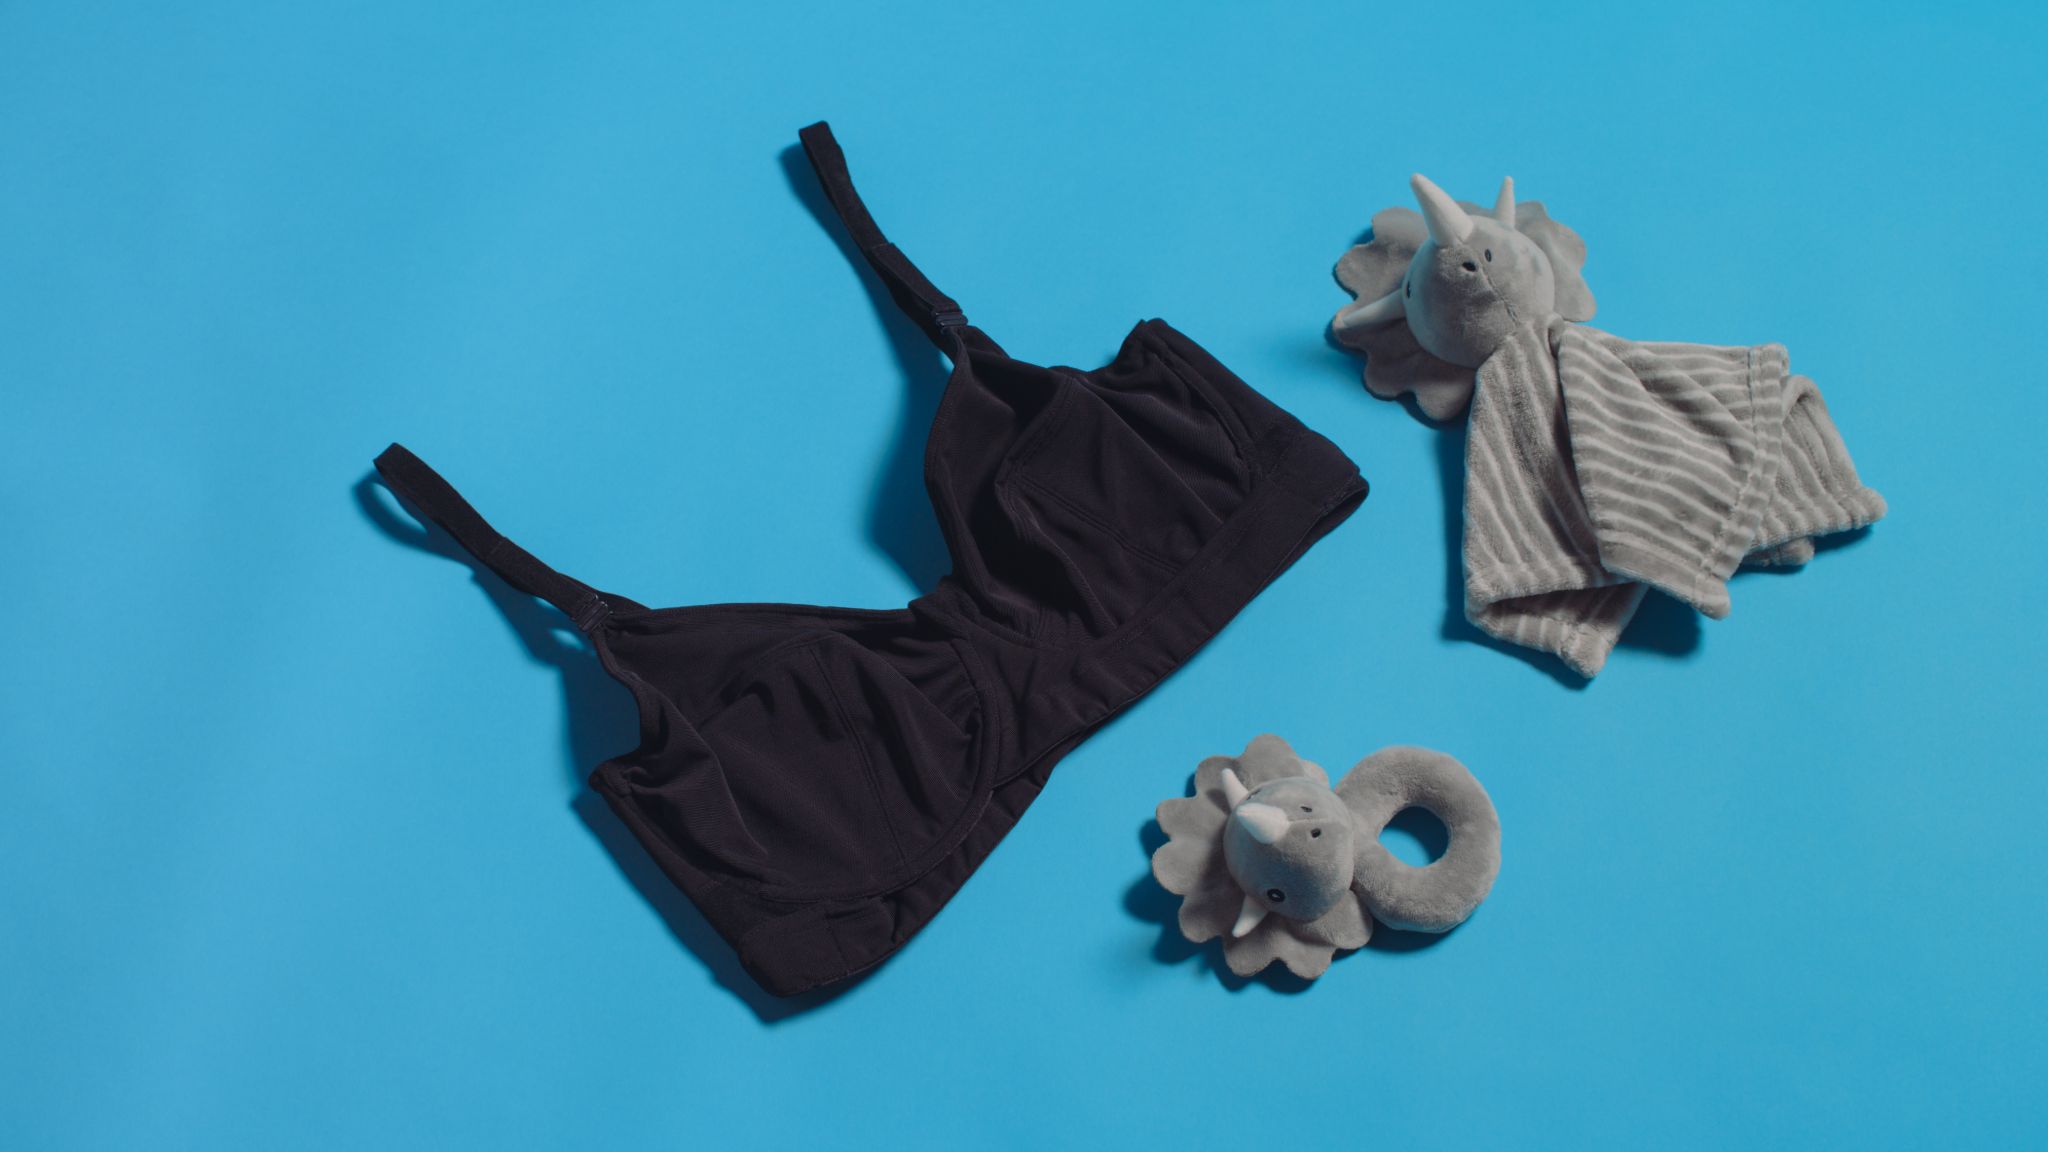 JENNAbra Product Flatlays Black bra on display with two stuffed toy elephants